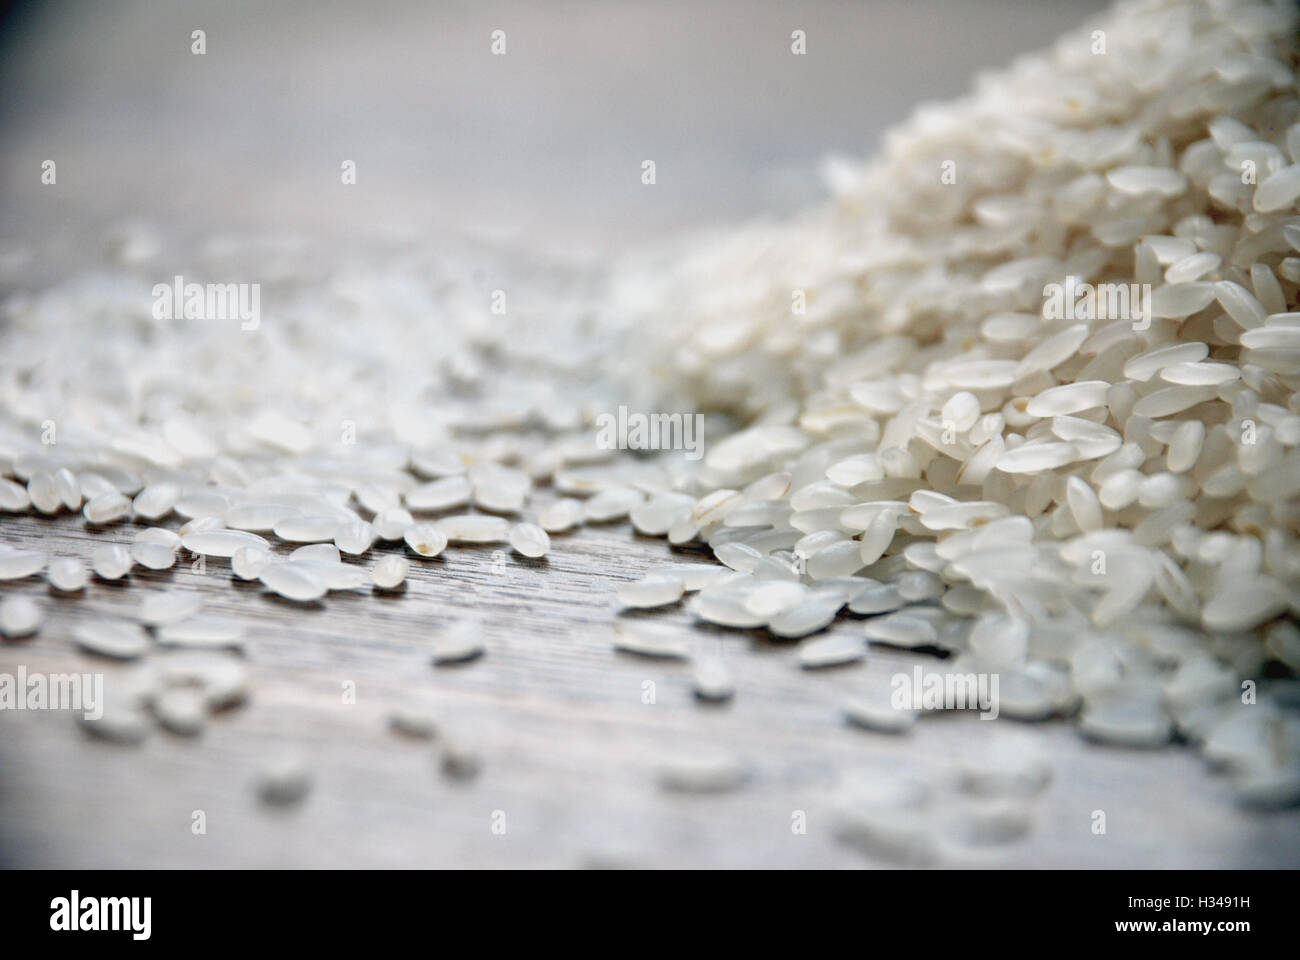 White rice and rice grains Stock Photo